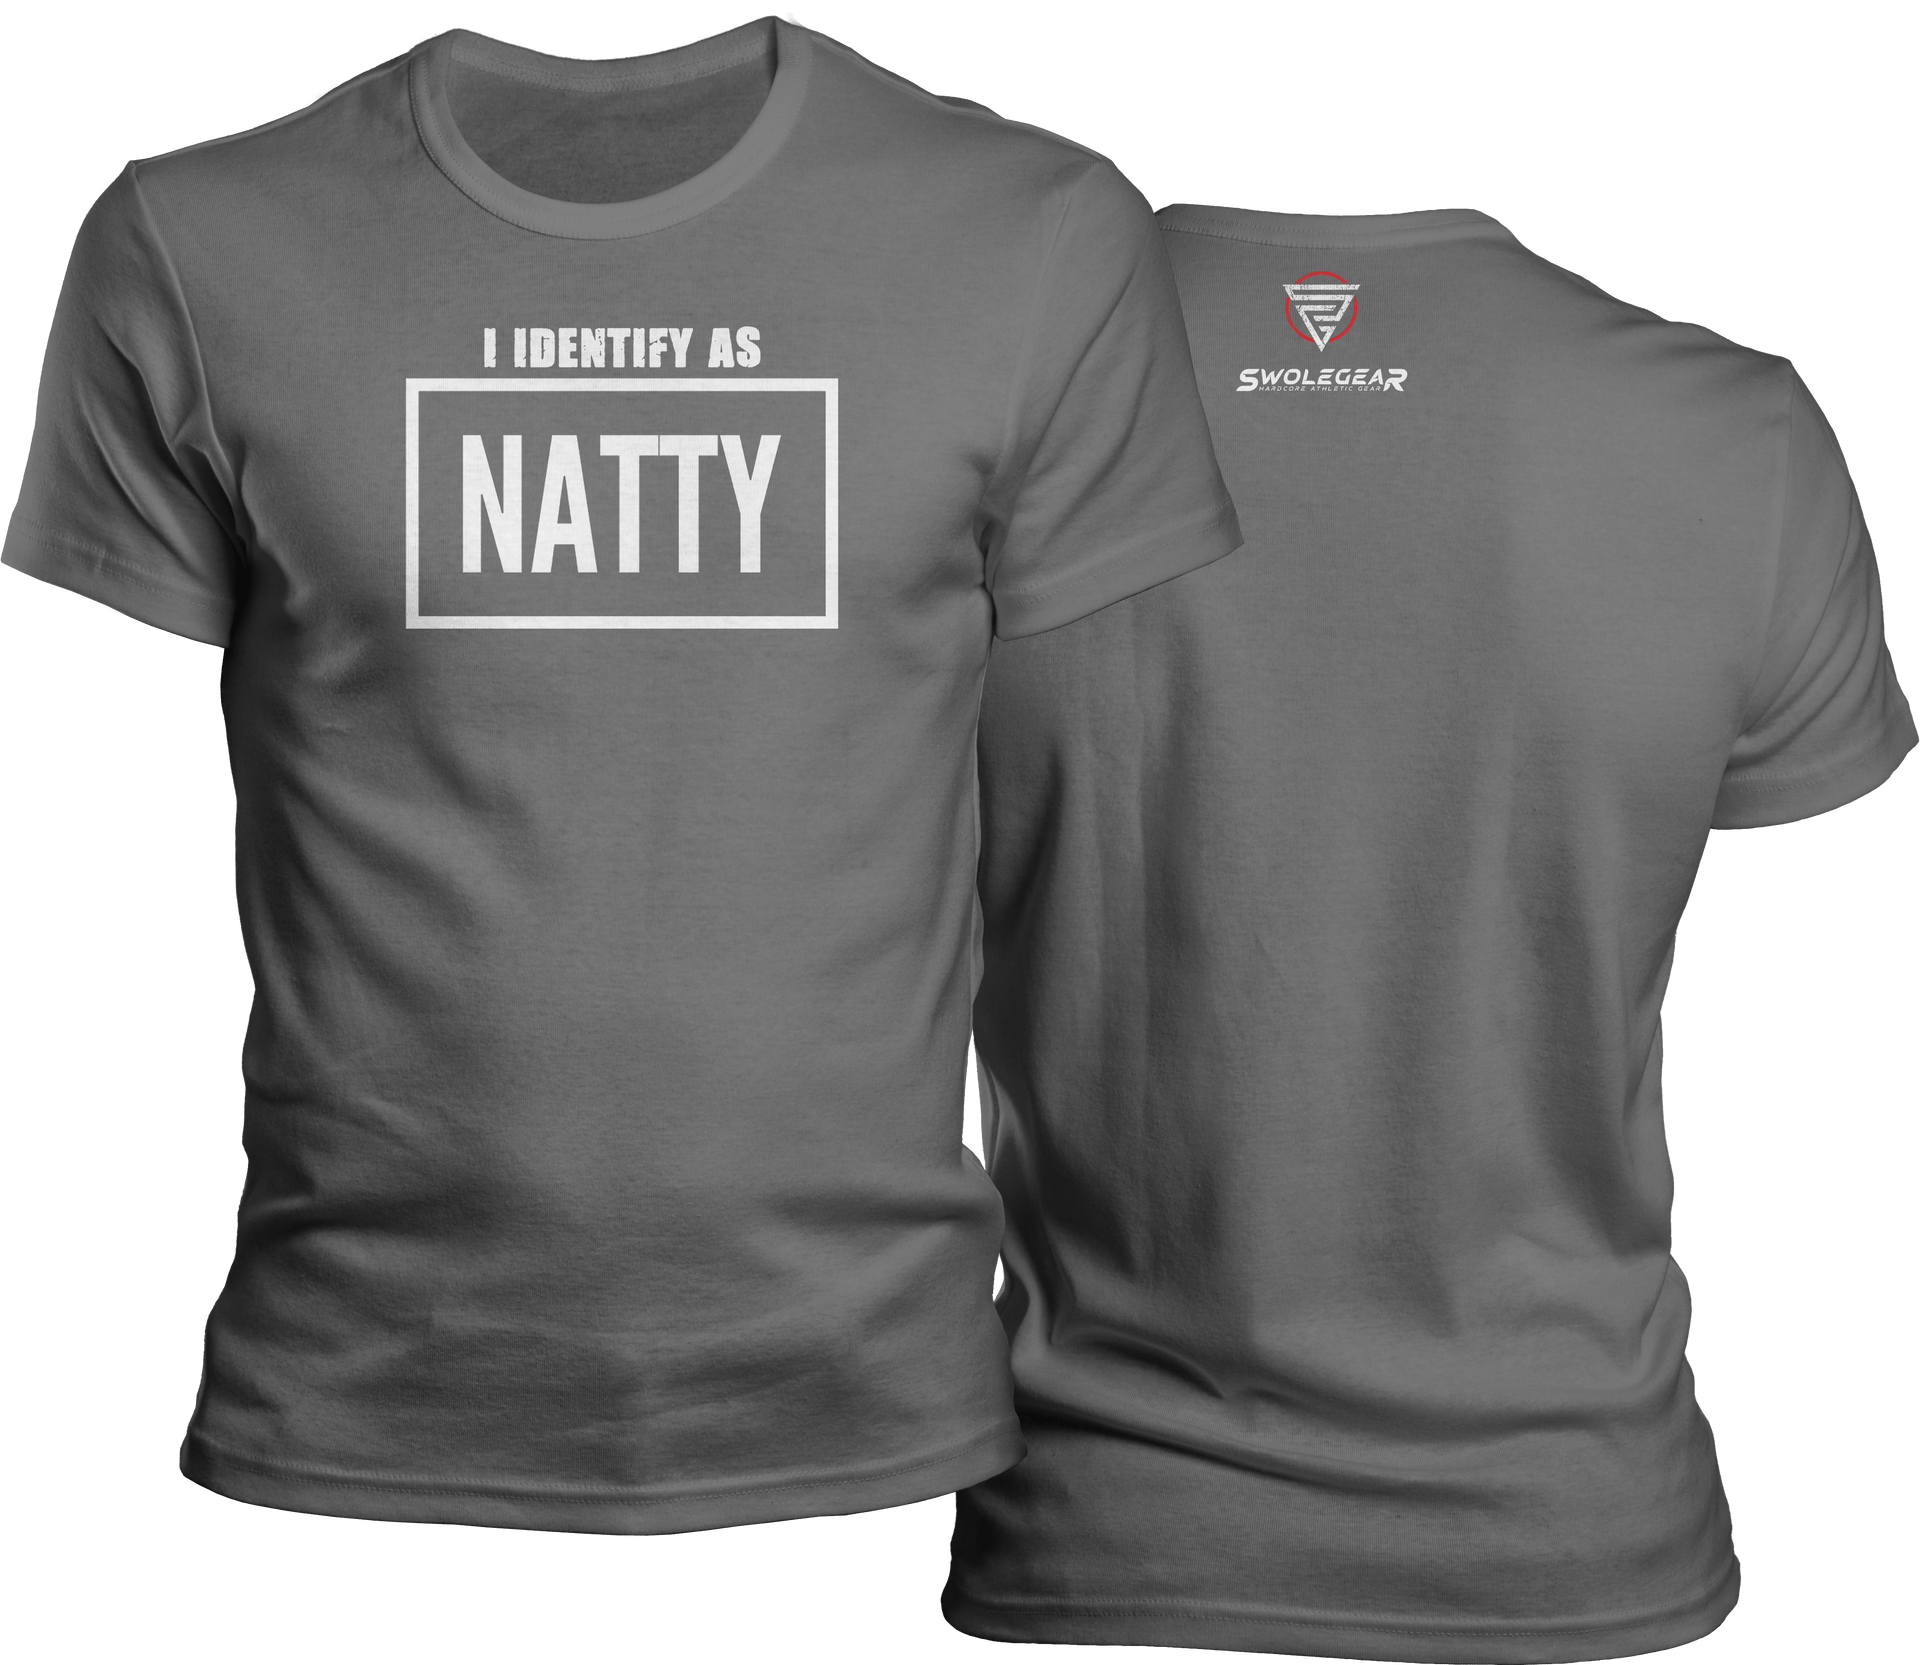 All Natty